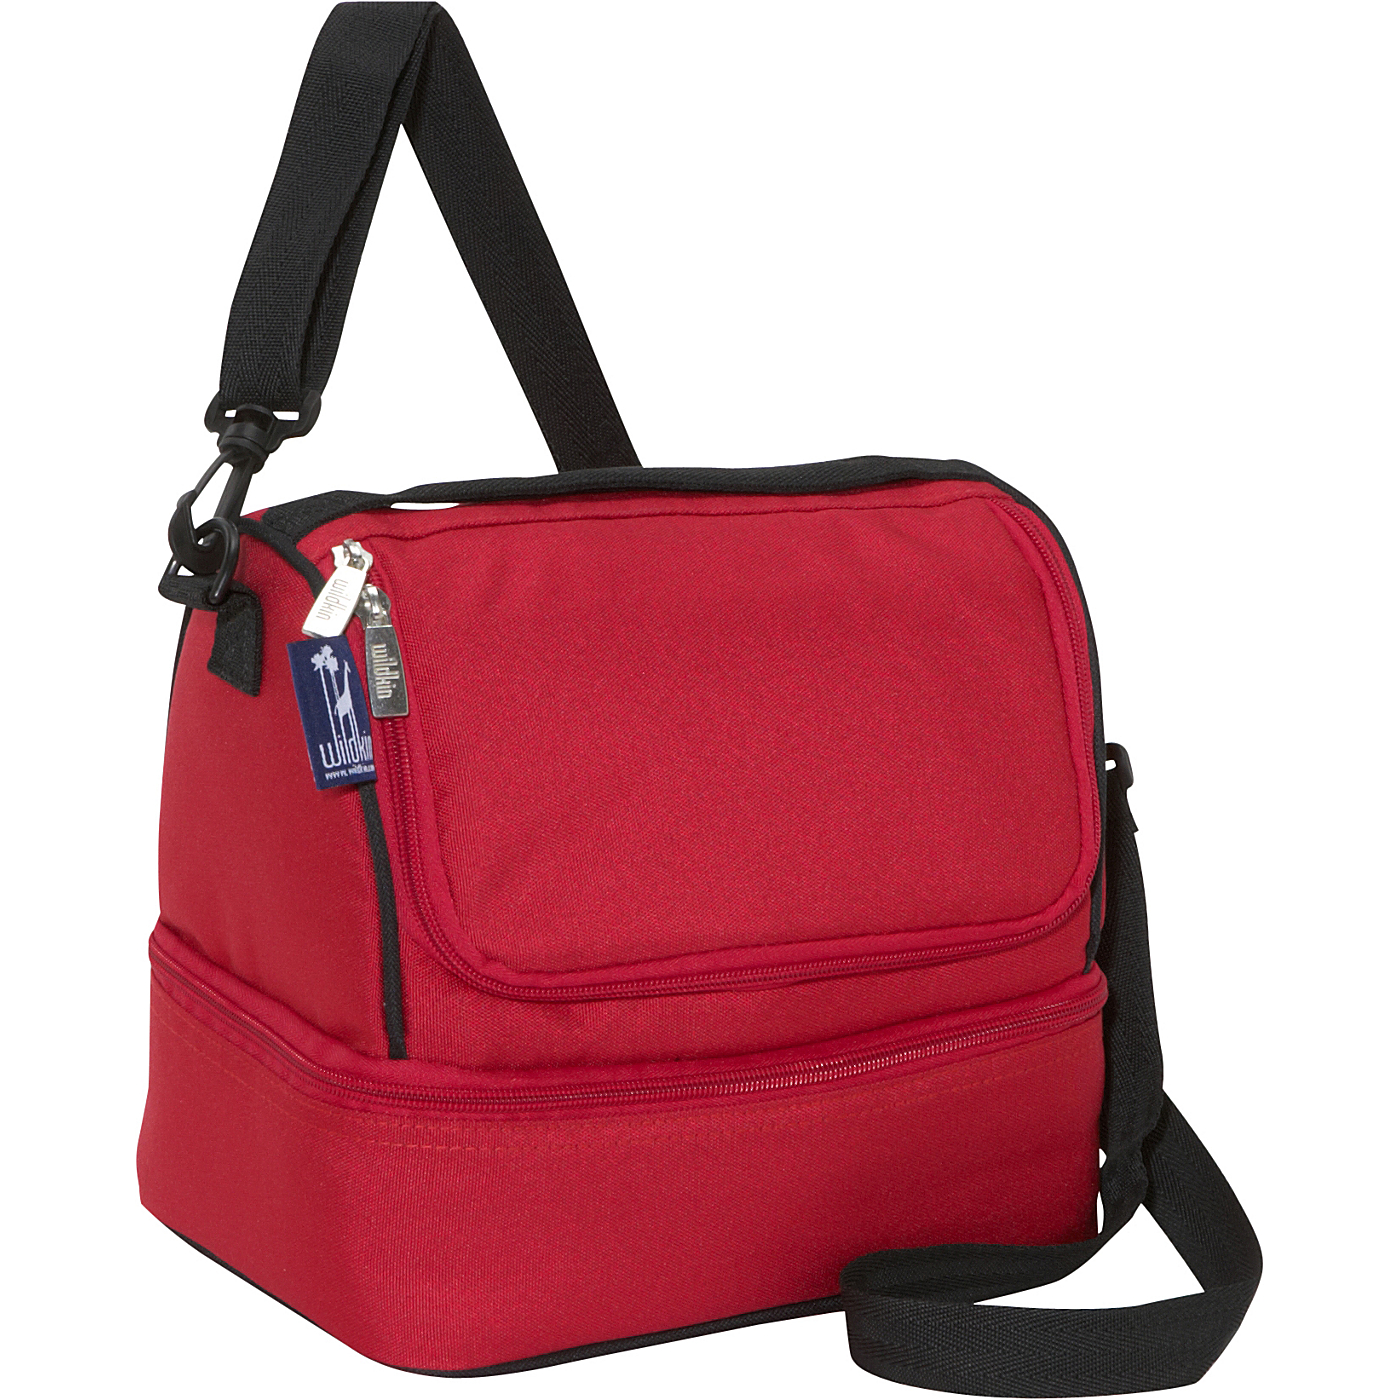 wildkin cardinal red double decker lunch bag after 20 % off $ 22 39